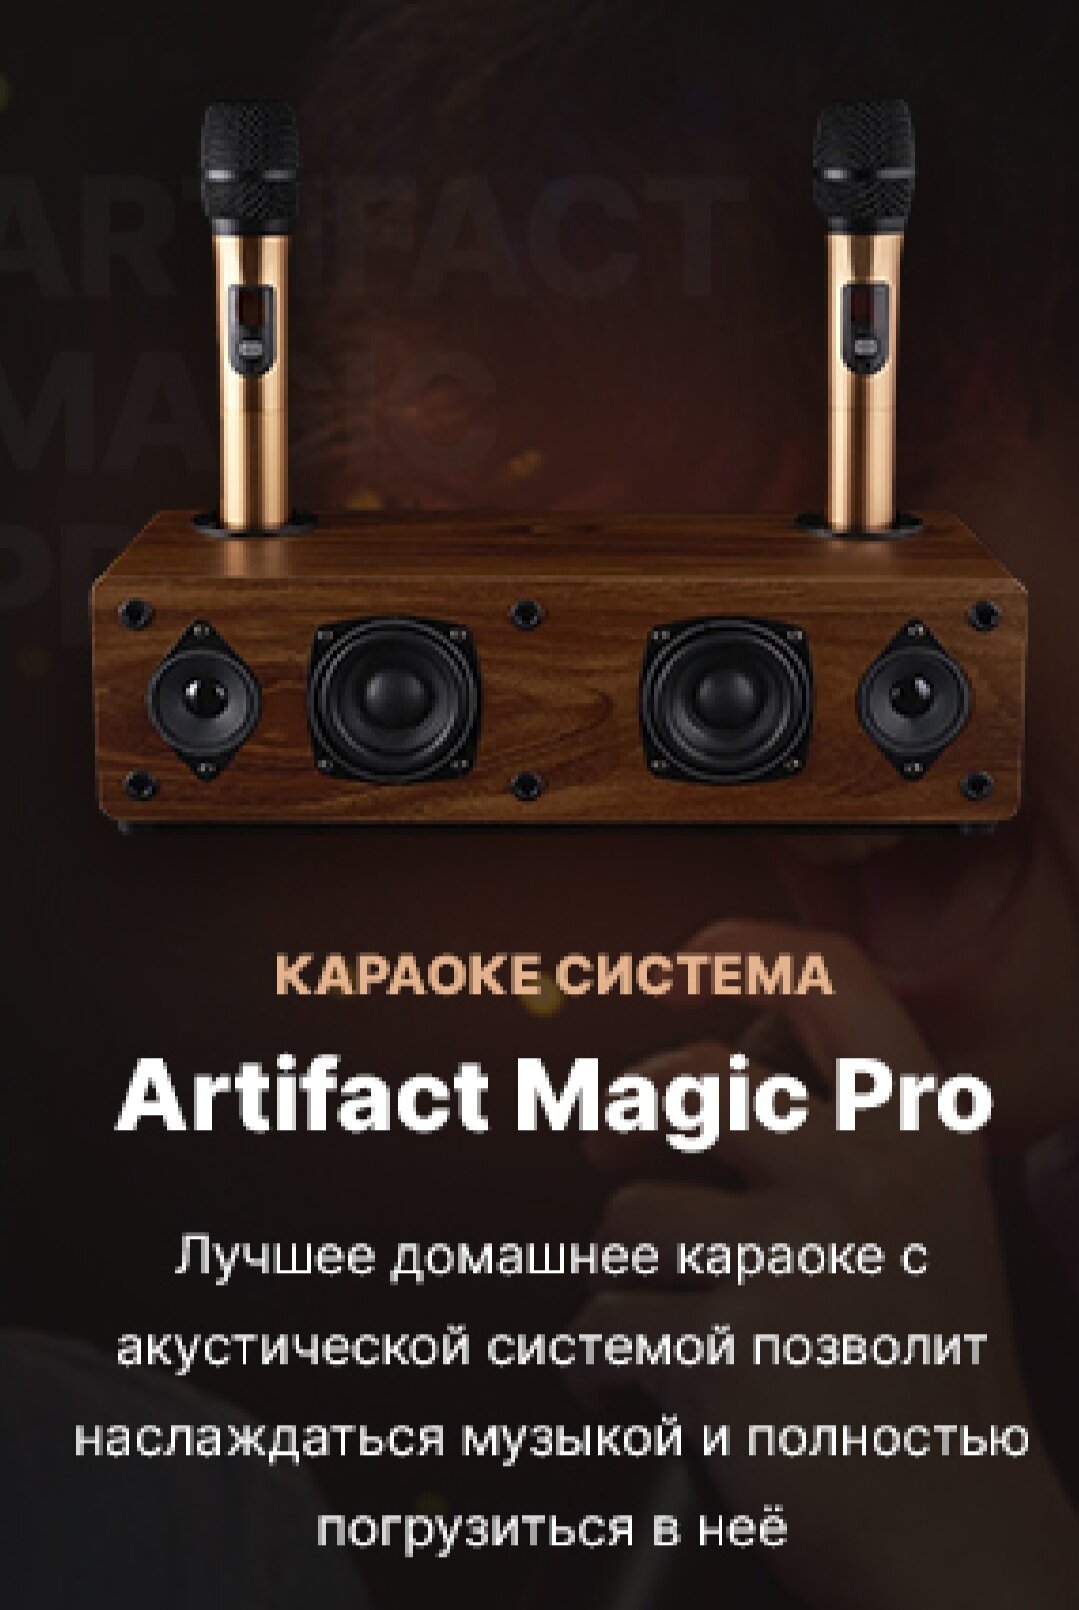 Караоке система для дома "Artifact Magic Pro"